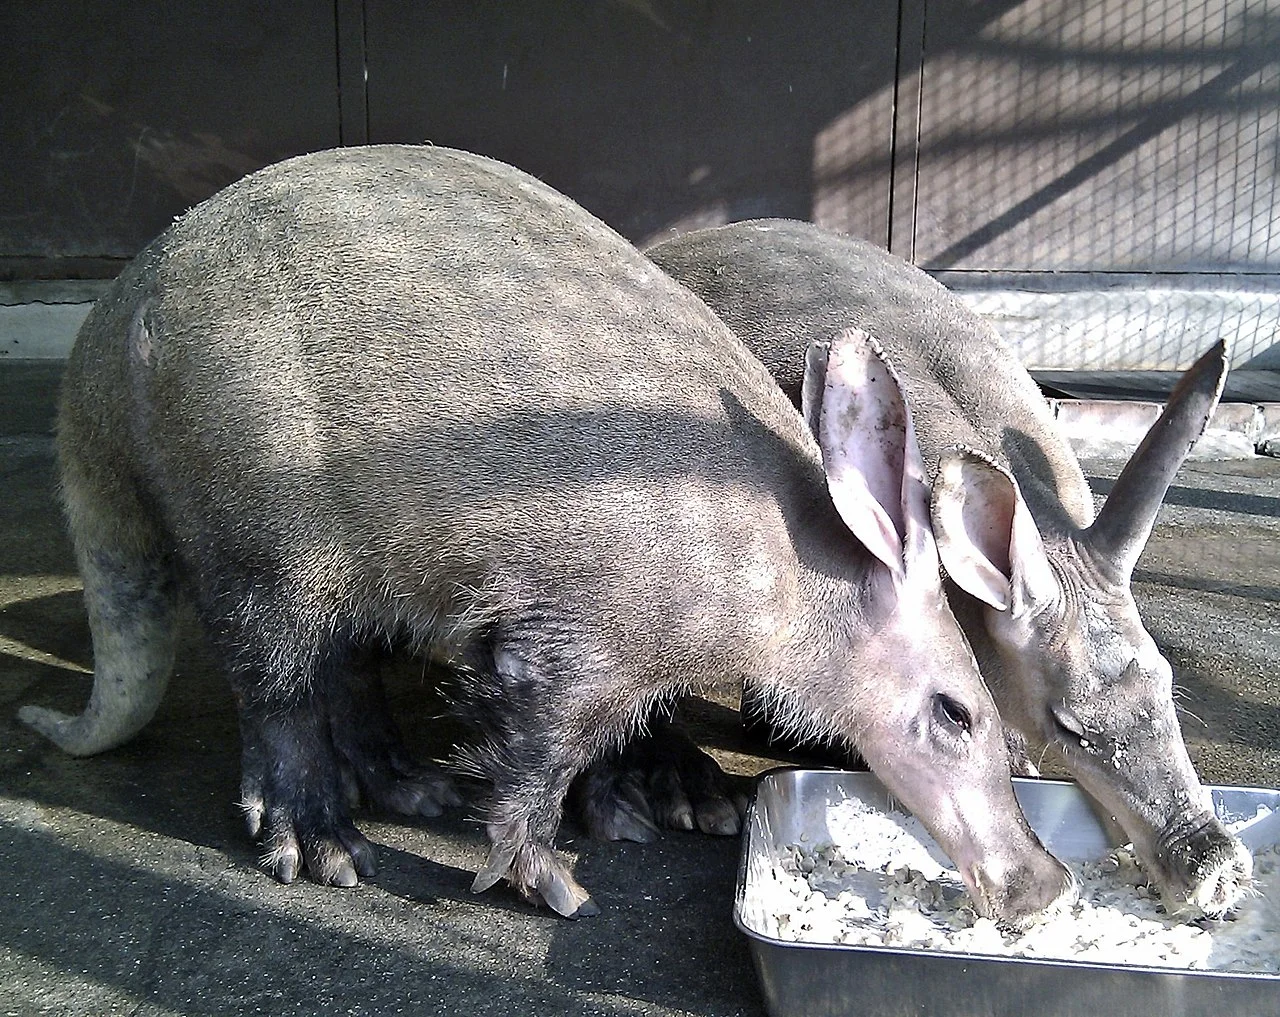 aardvark vs anteater vs armadillo